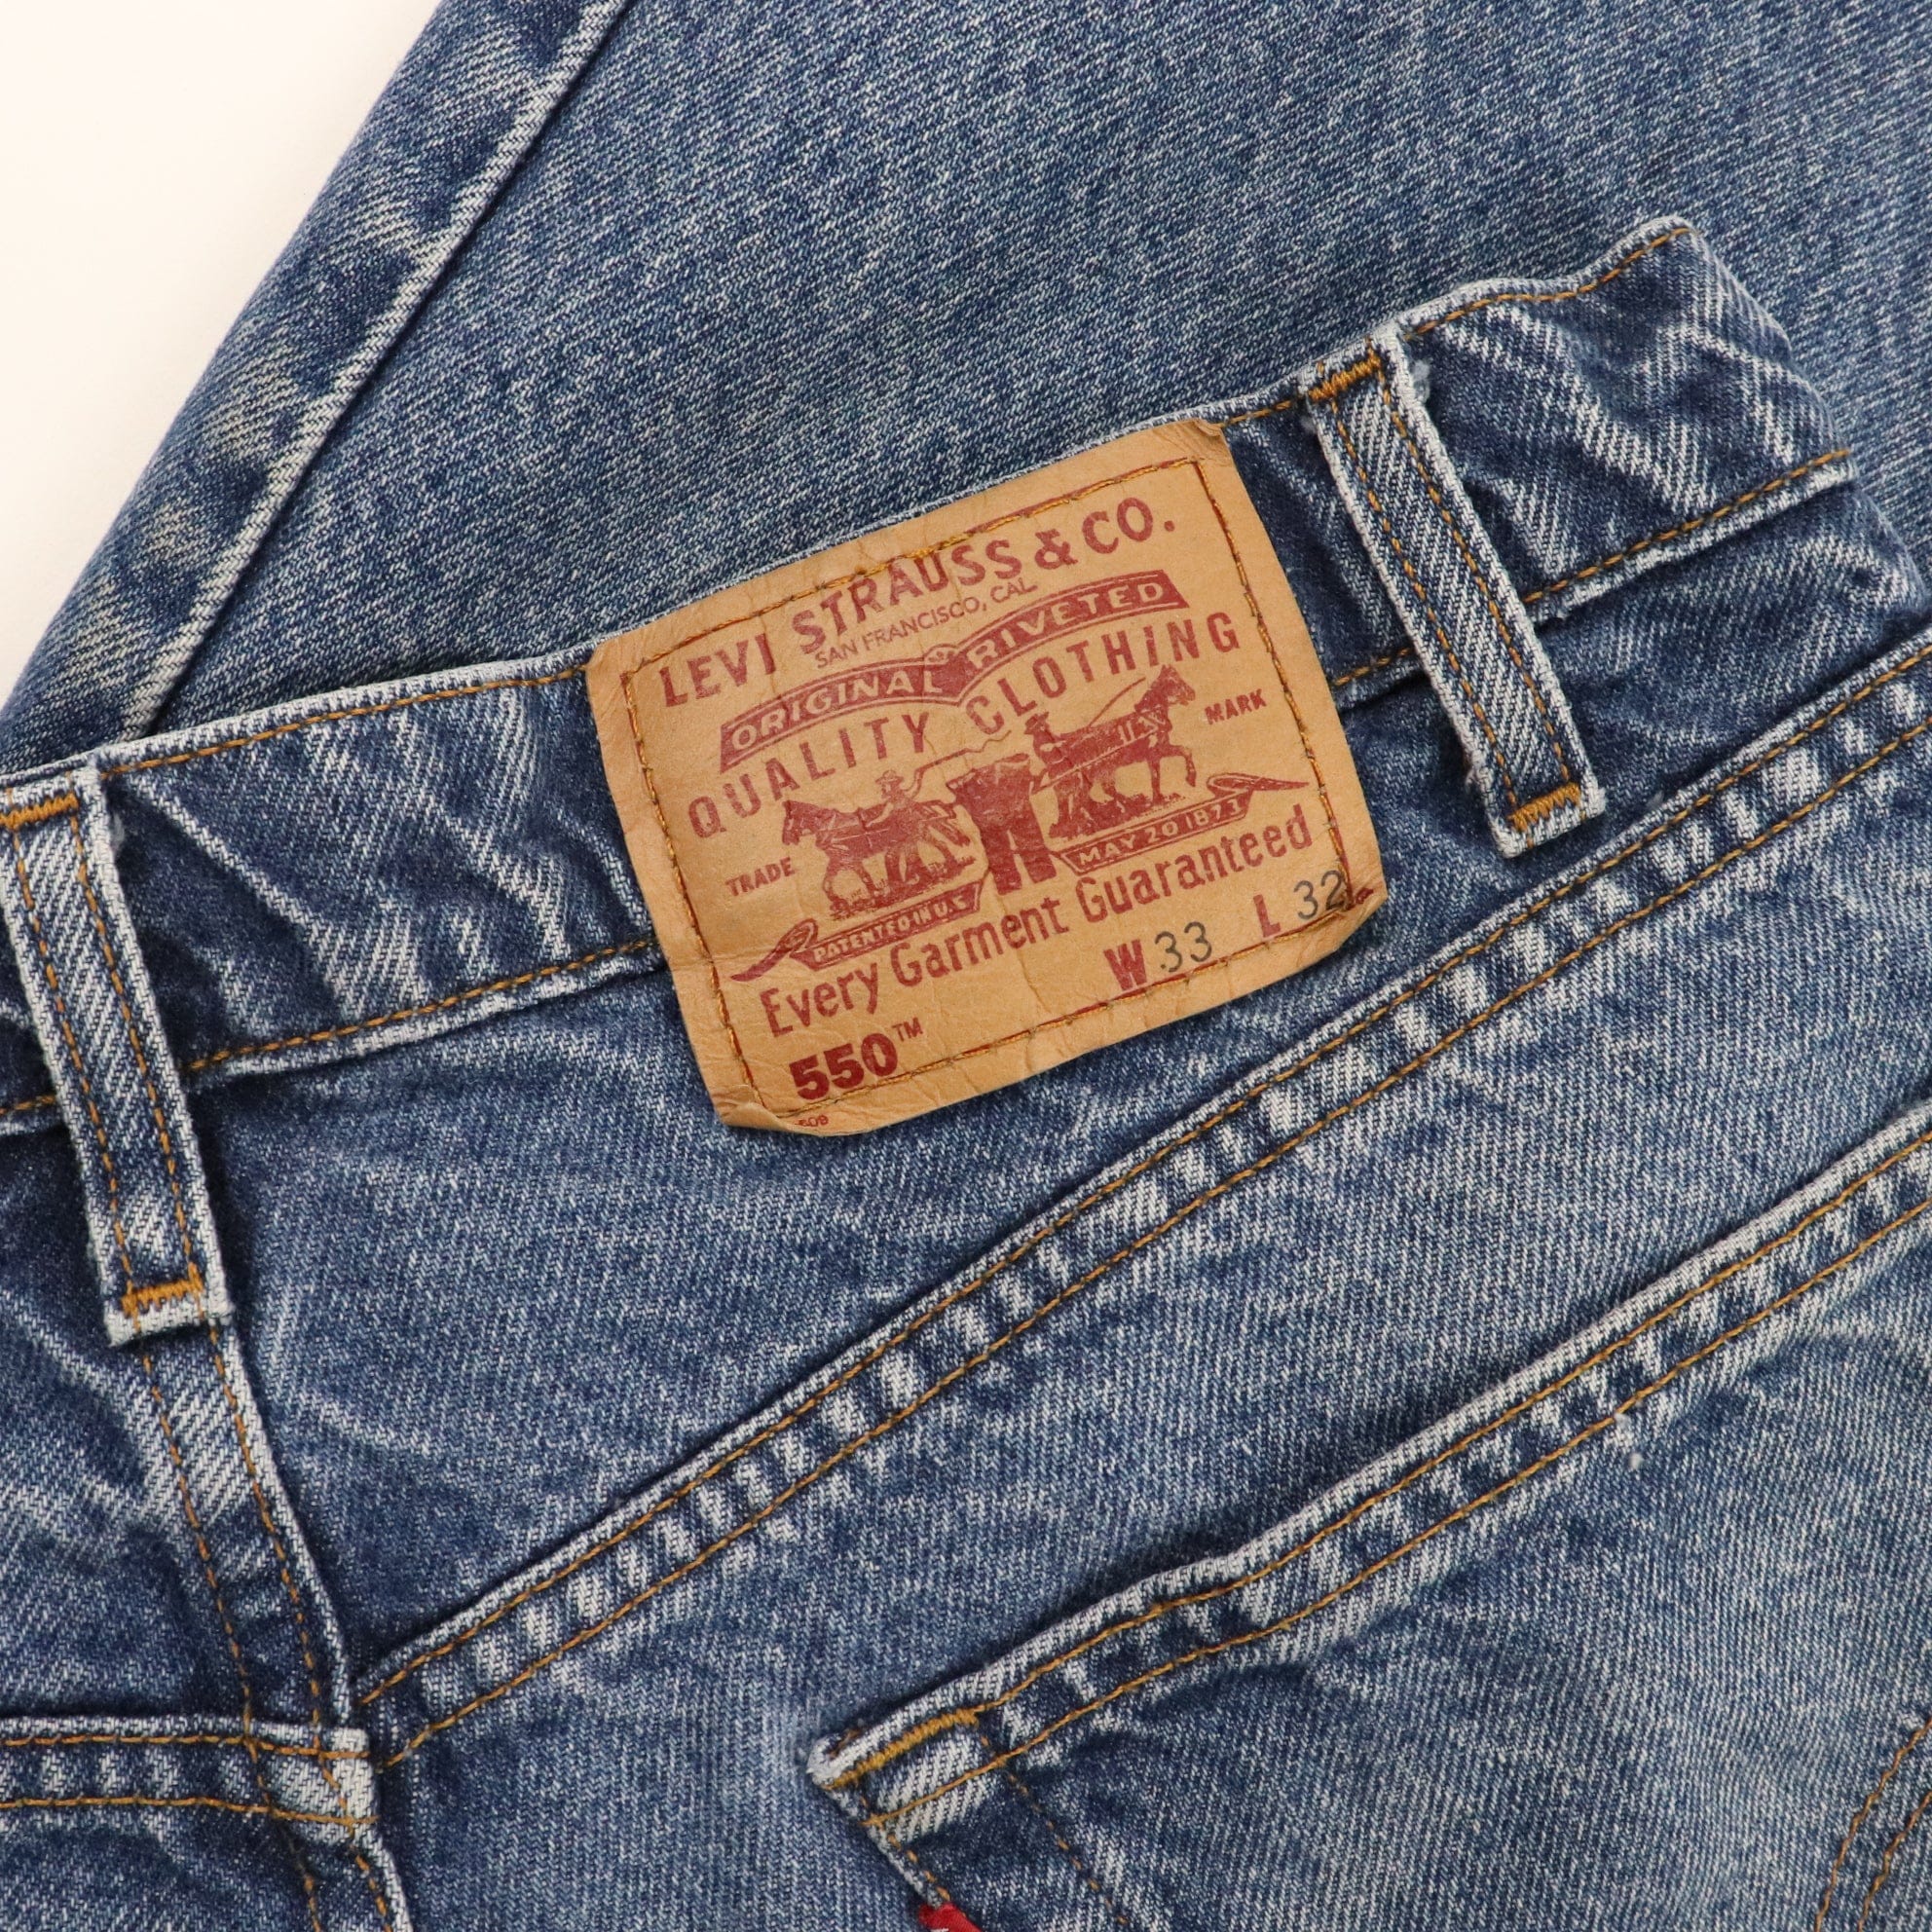 Vintage Levi's 550 Relaxed Fit Denim Jeans Size 33 x 32